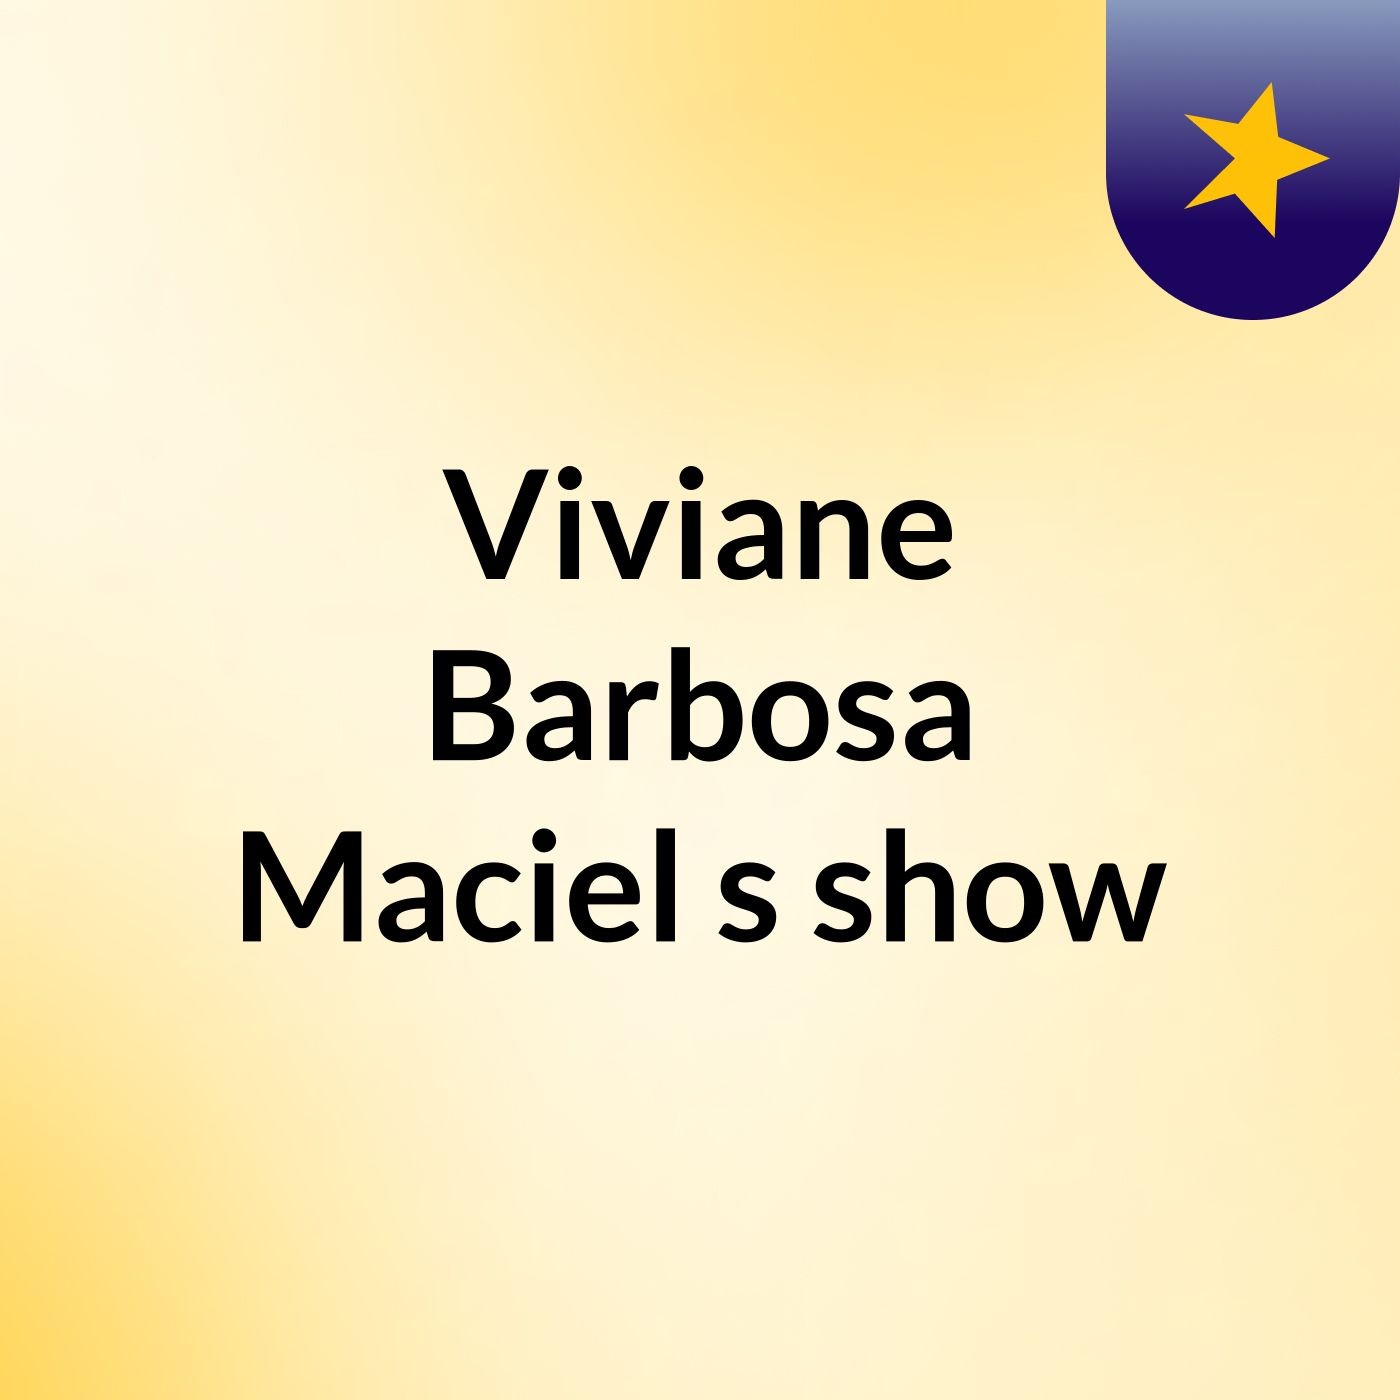 Viviane Barbosa Maciel's show